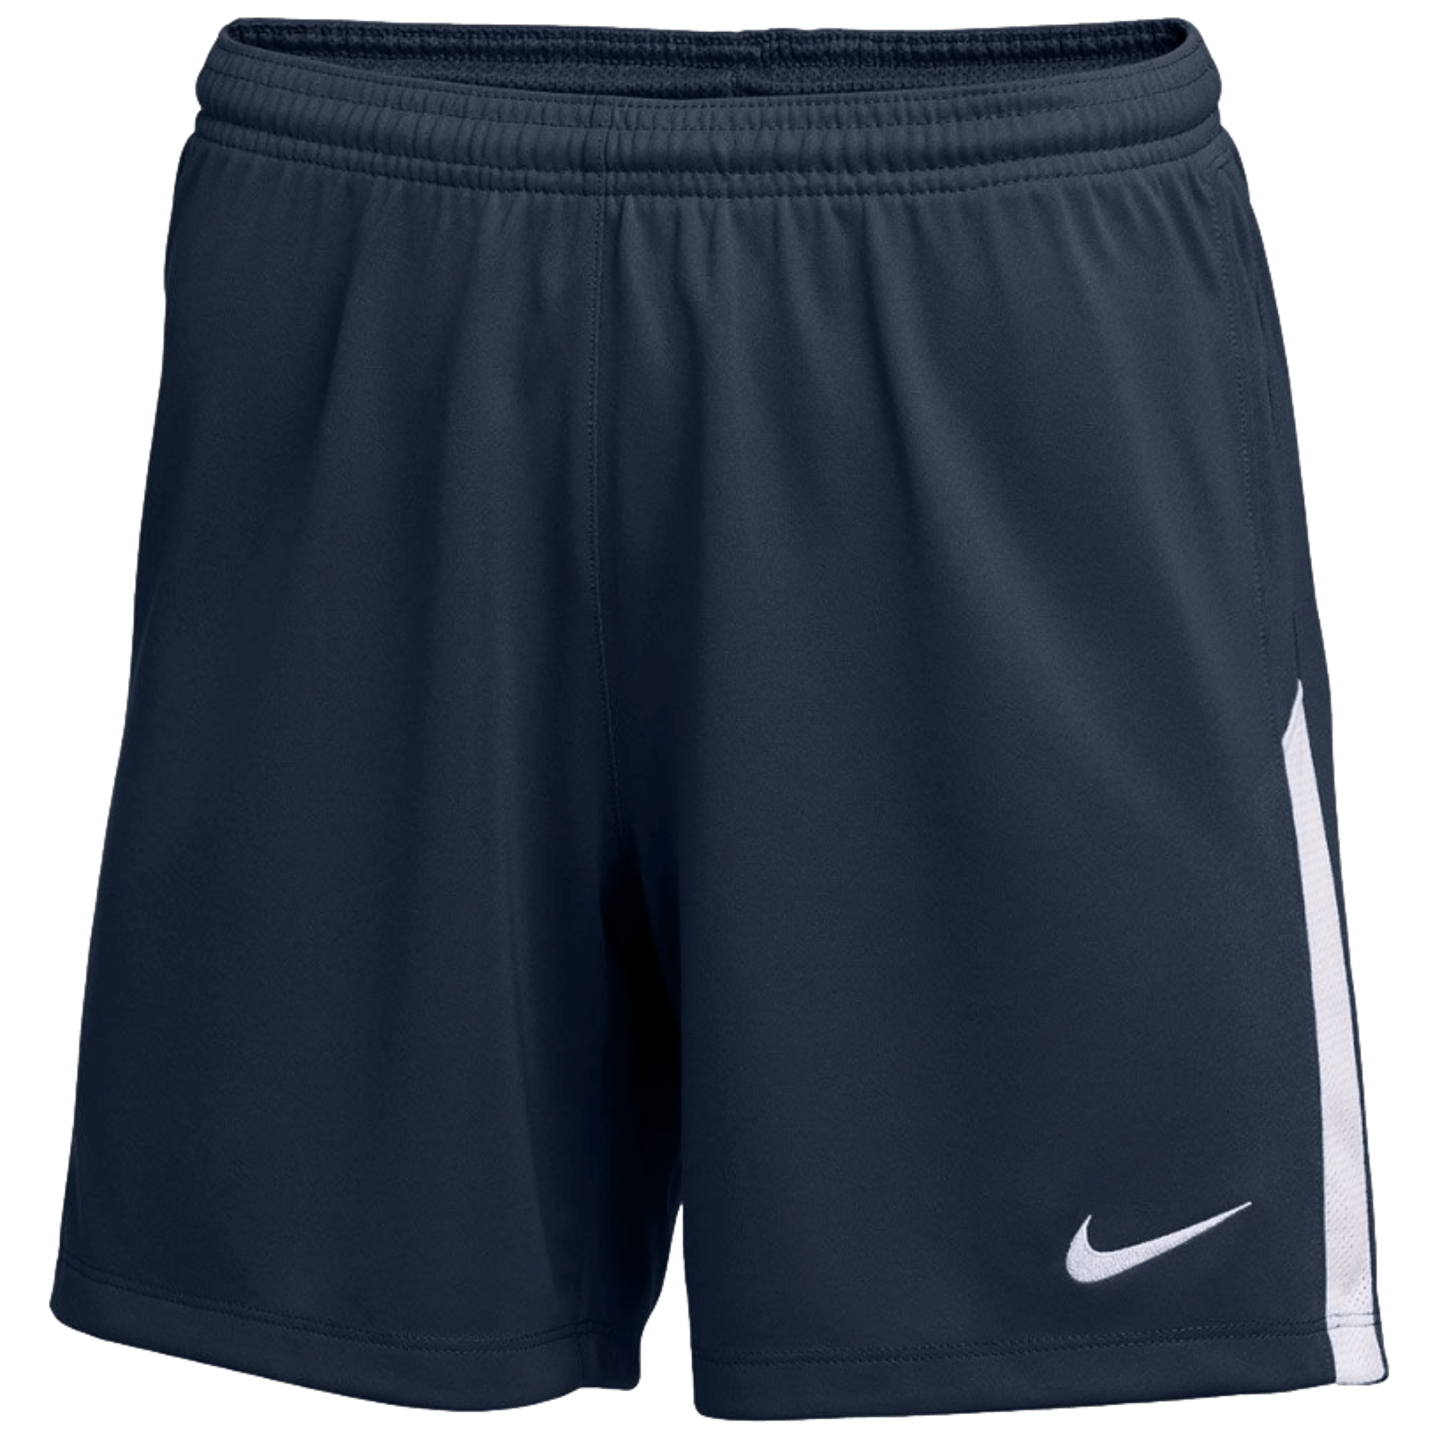 Nike Dry League Knit ll Women's Shorts